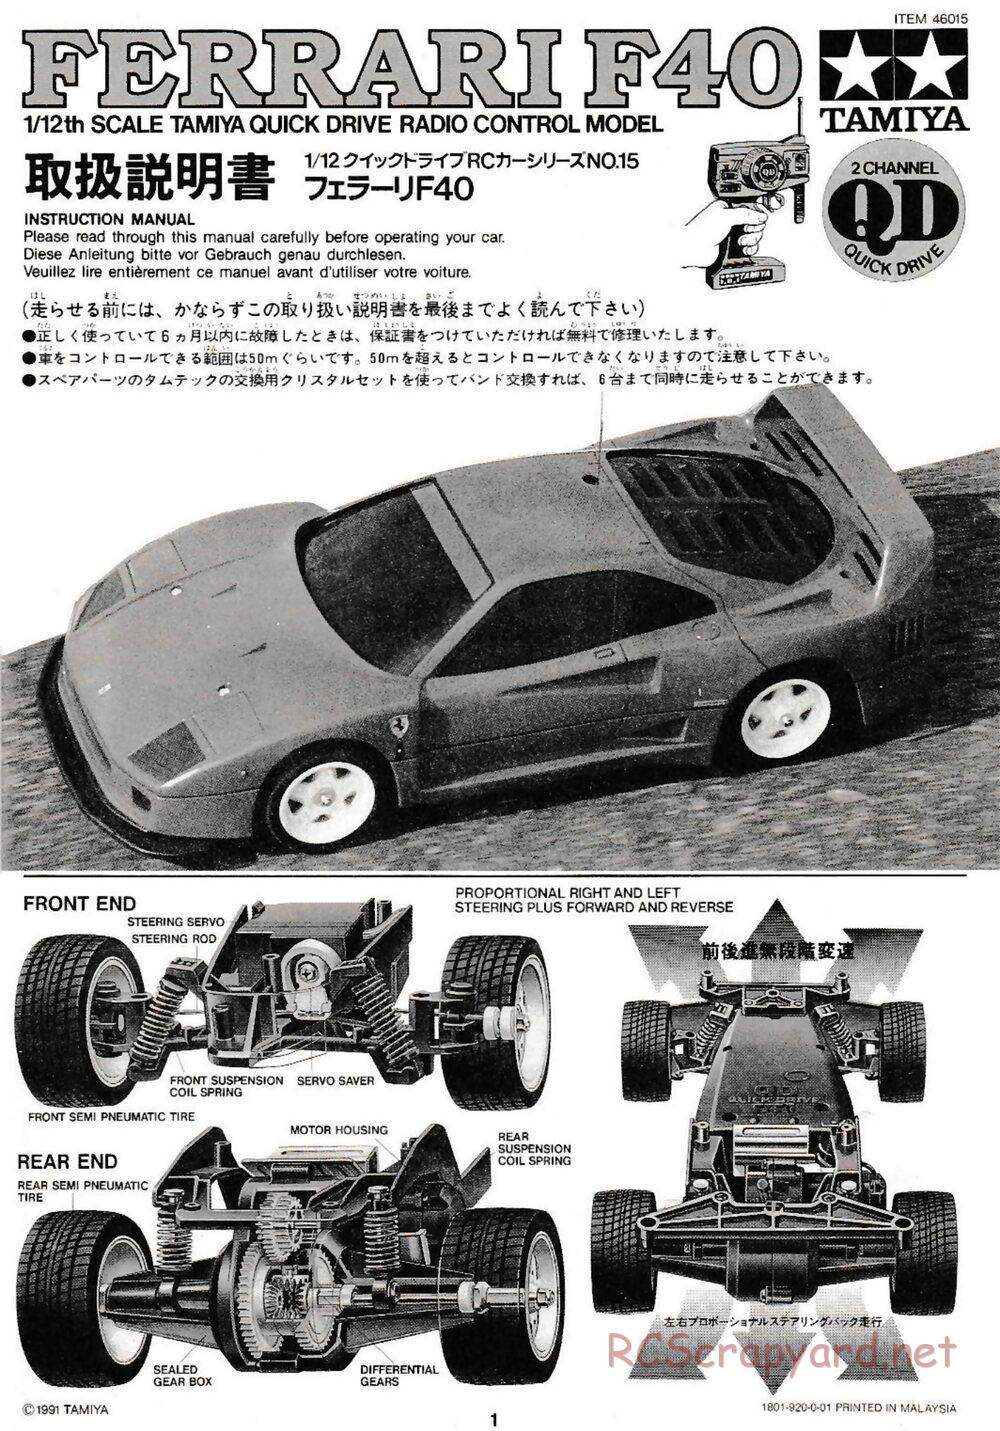 Tamiya - Ferrari F40 QD Chassis - Manual - Page 1